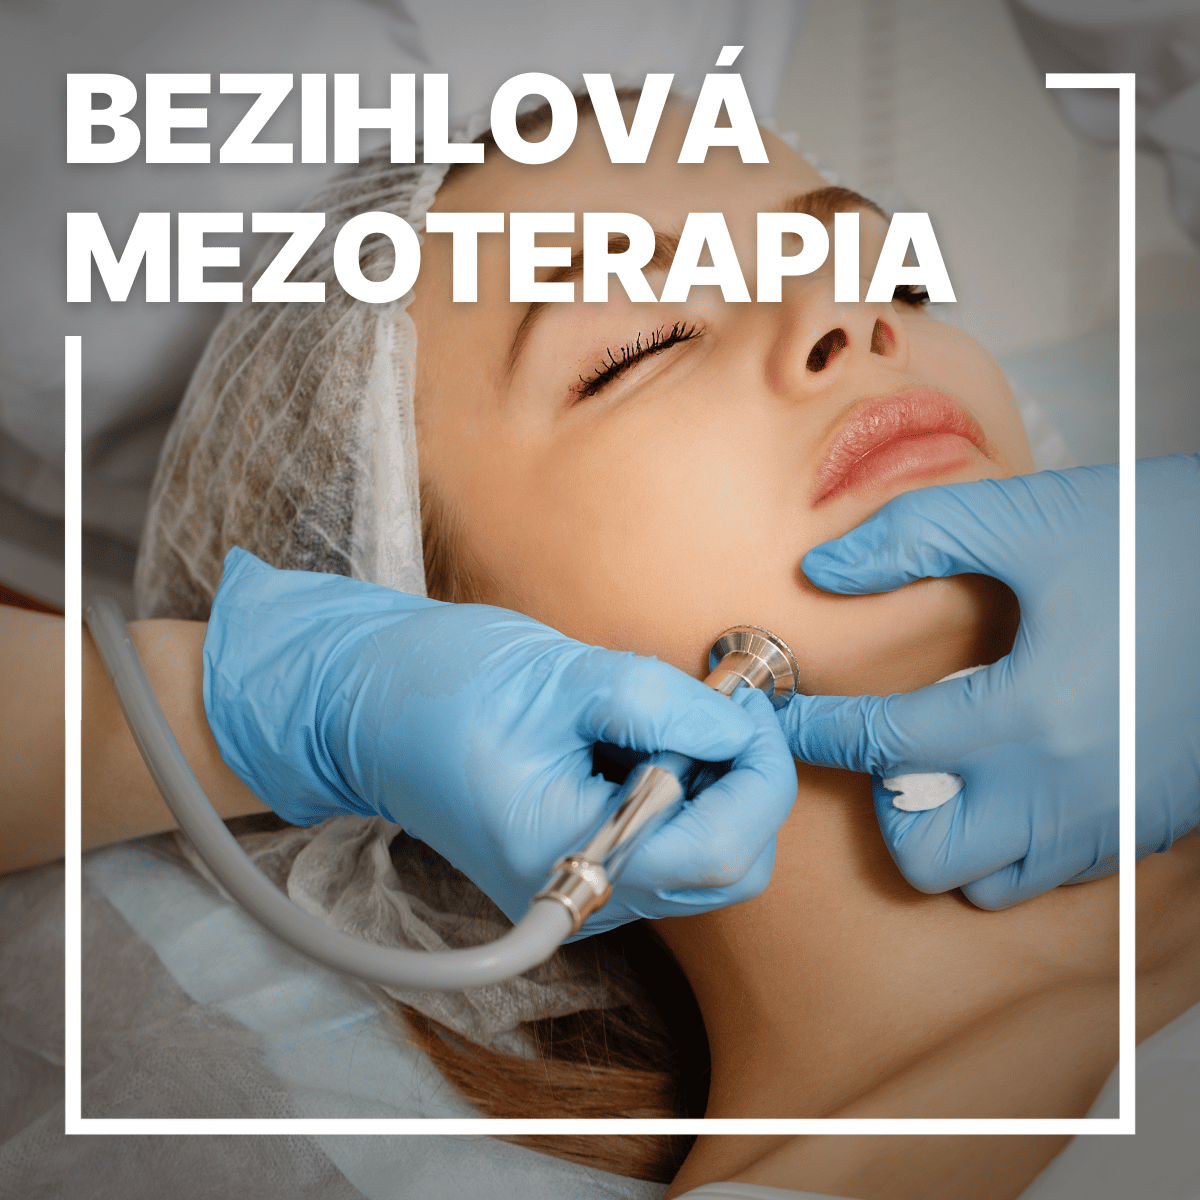 Bezihlova mezoterapia - Global Education Centre